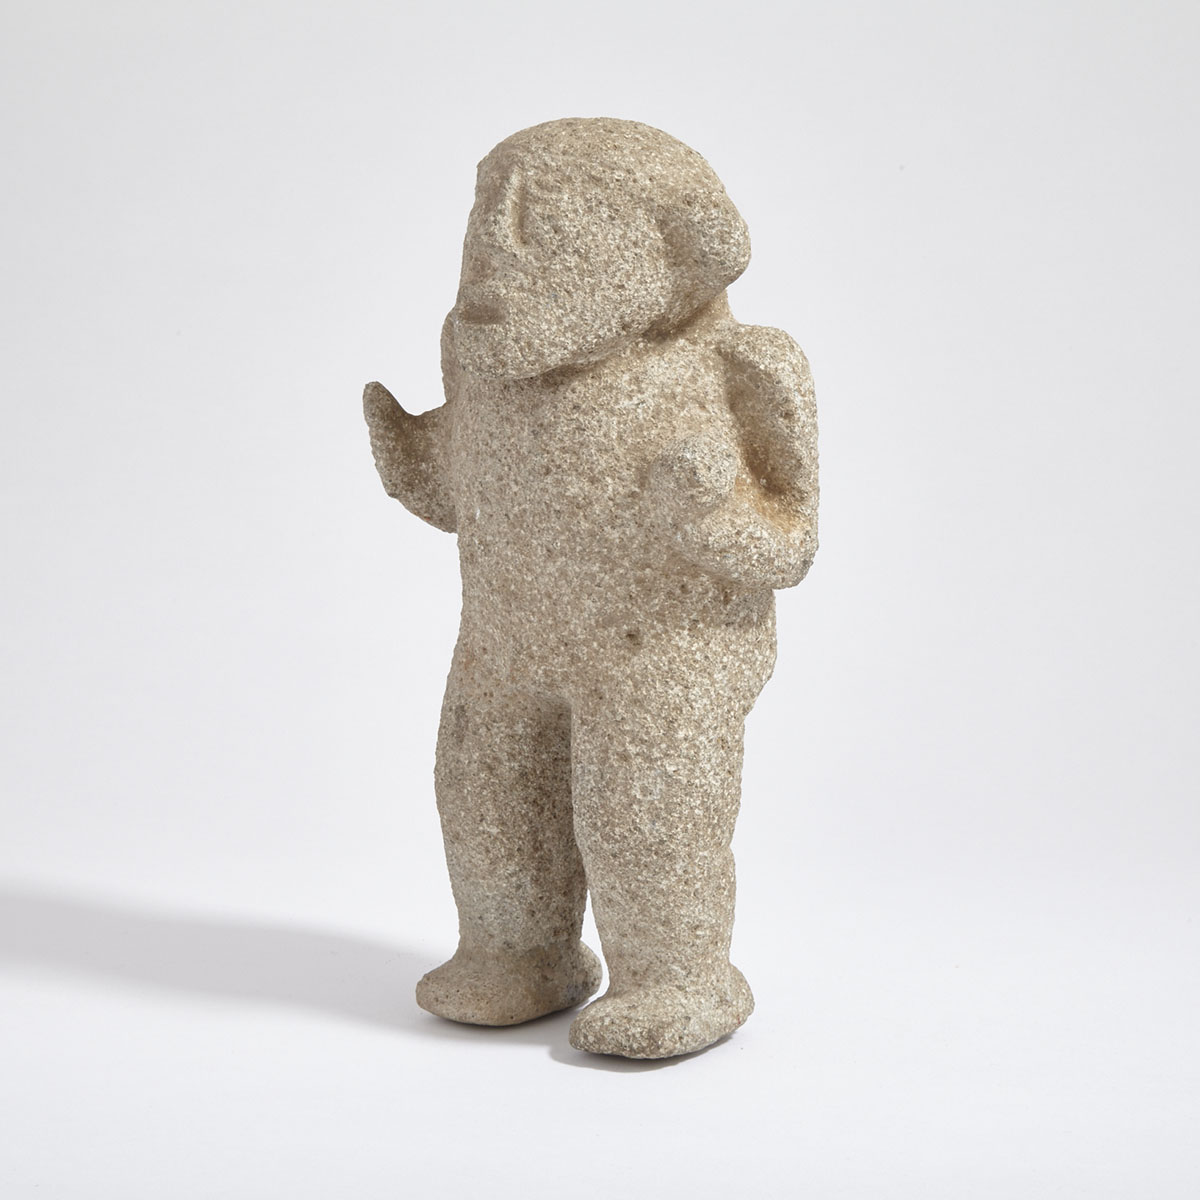 Guanacaste Nicoya Peninsula Standing Male Figure, 800-1200 A.D.